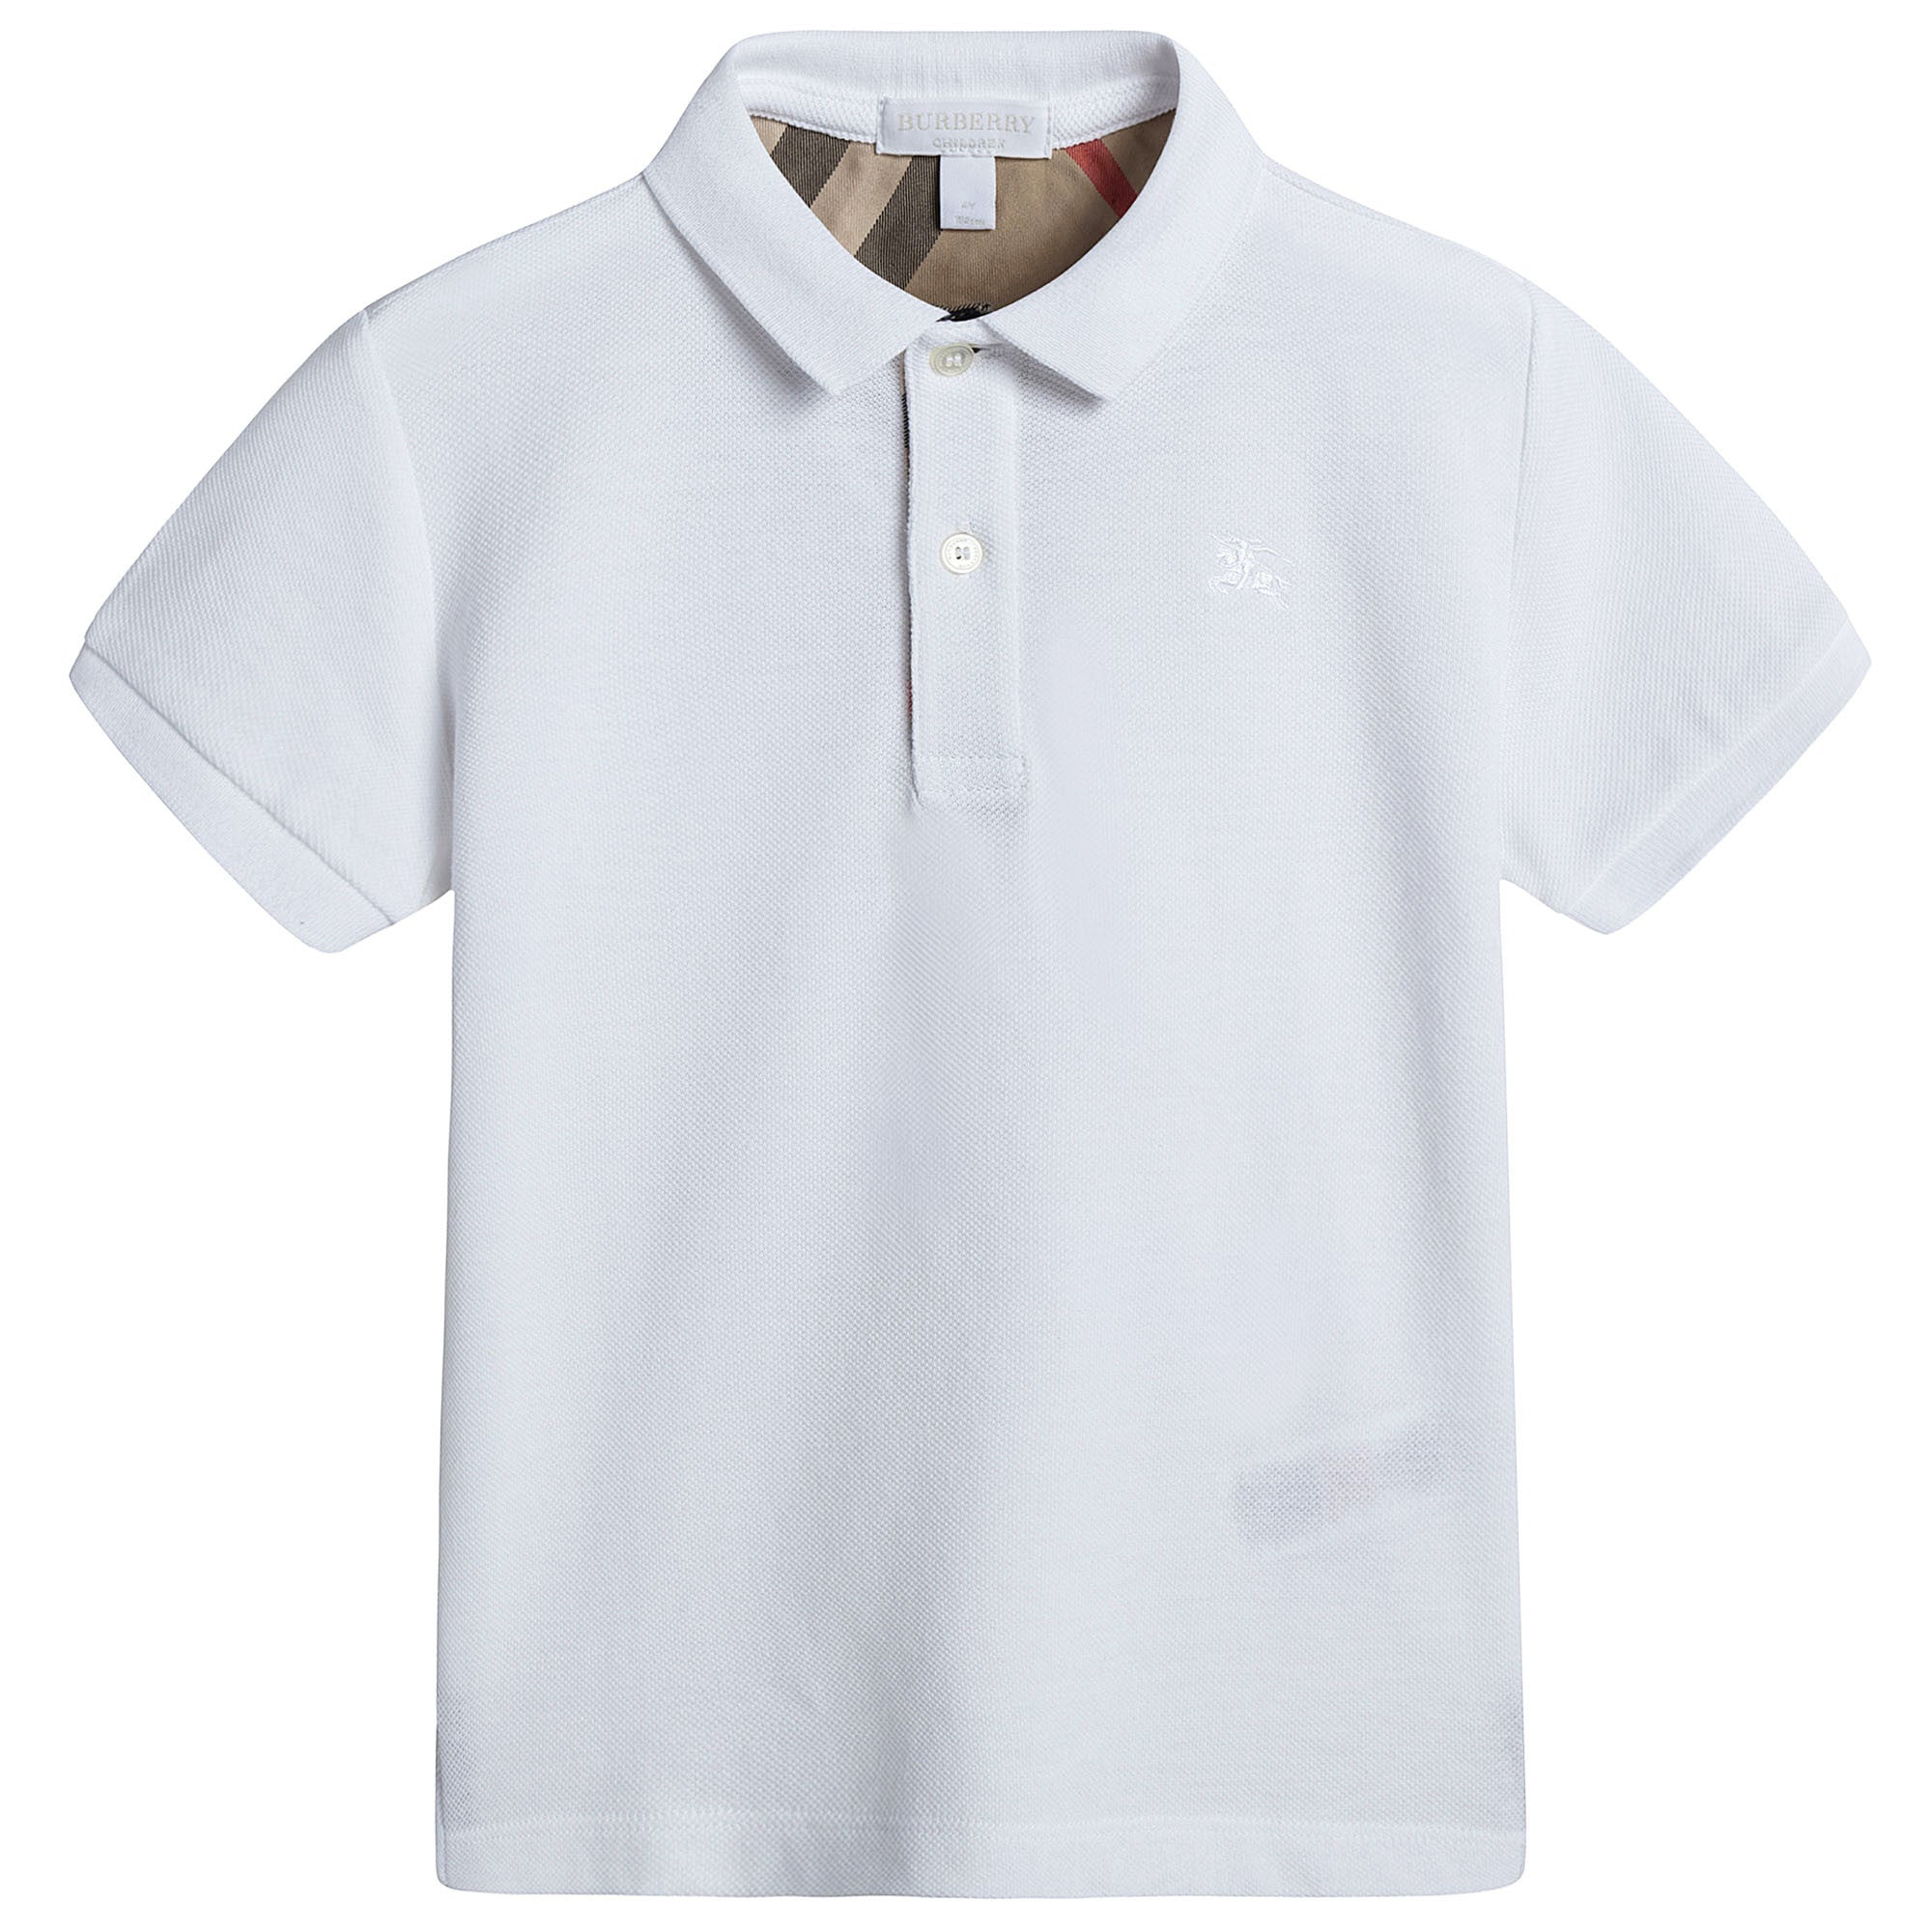 Boys White Cotton Polo Shirt - CÉMAROSE | Children's Fashion Store - 1